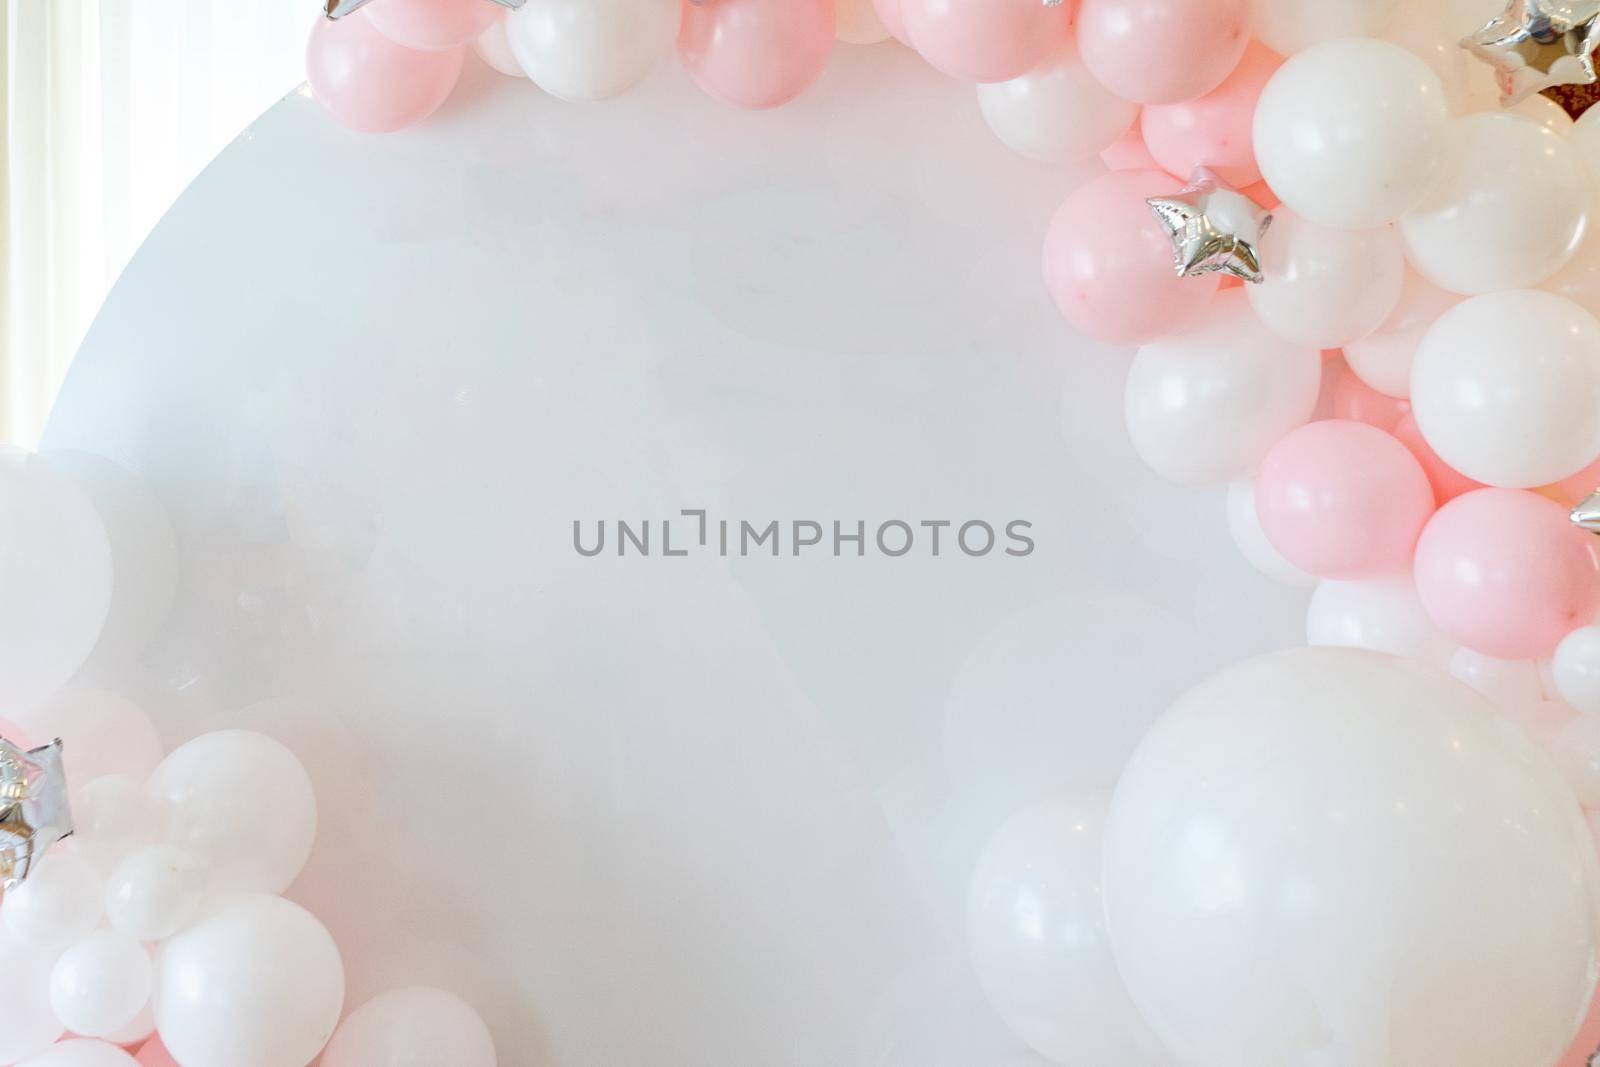 frame on a white background of pink and white balloons by Serhii_Voroshchuk